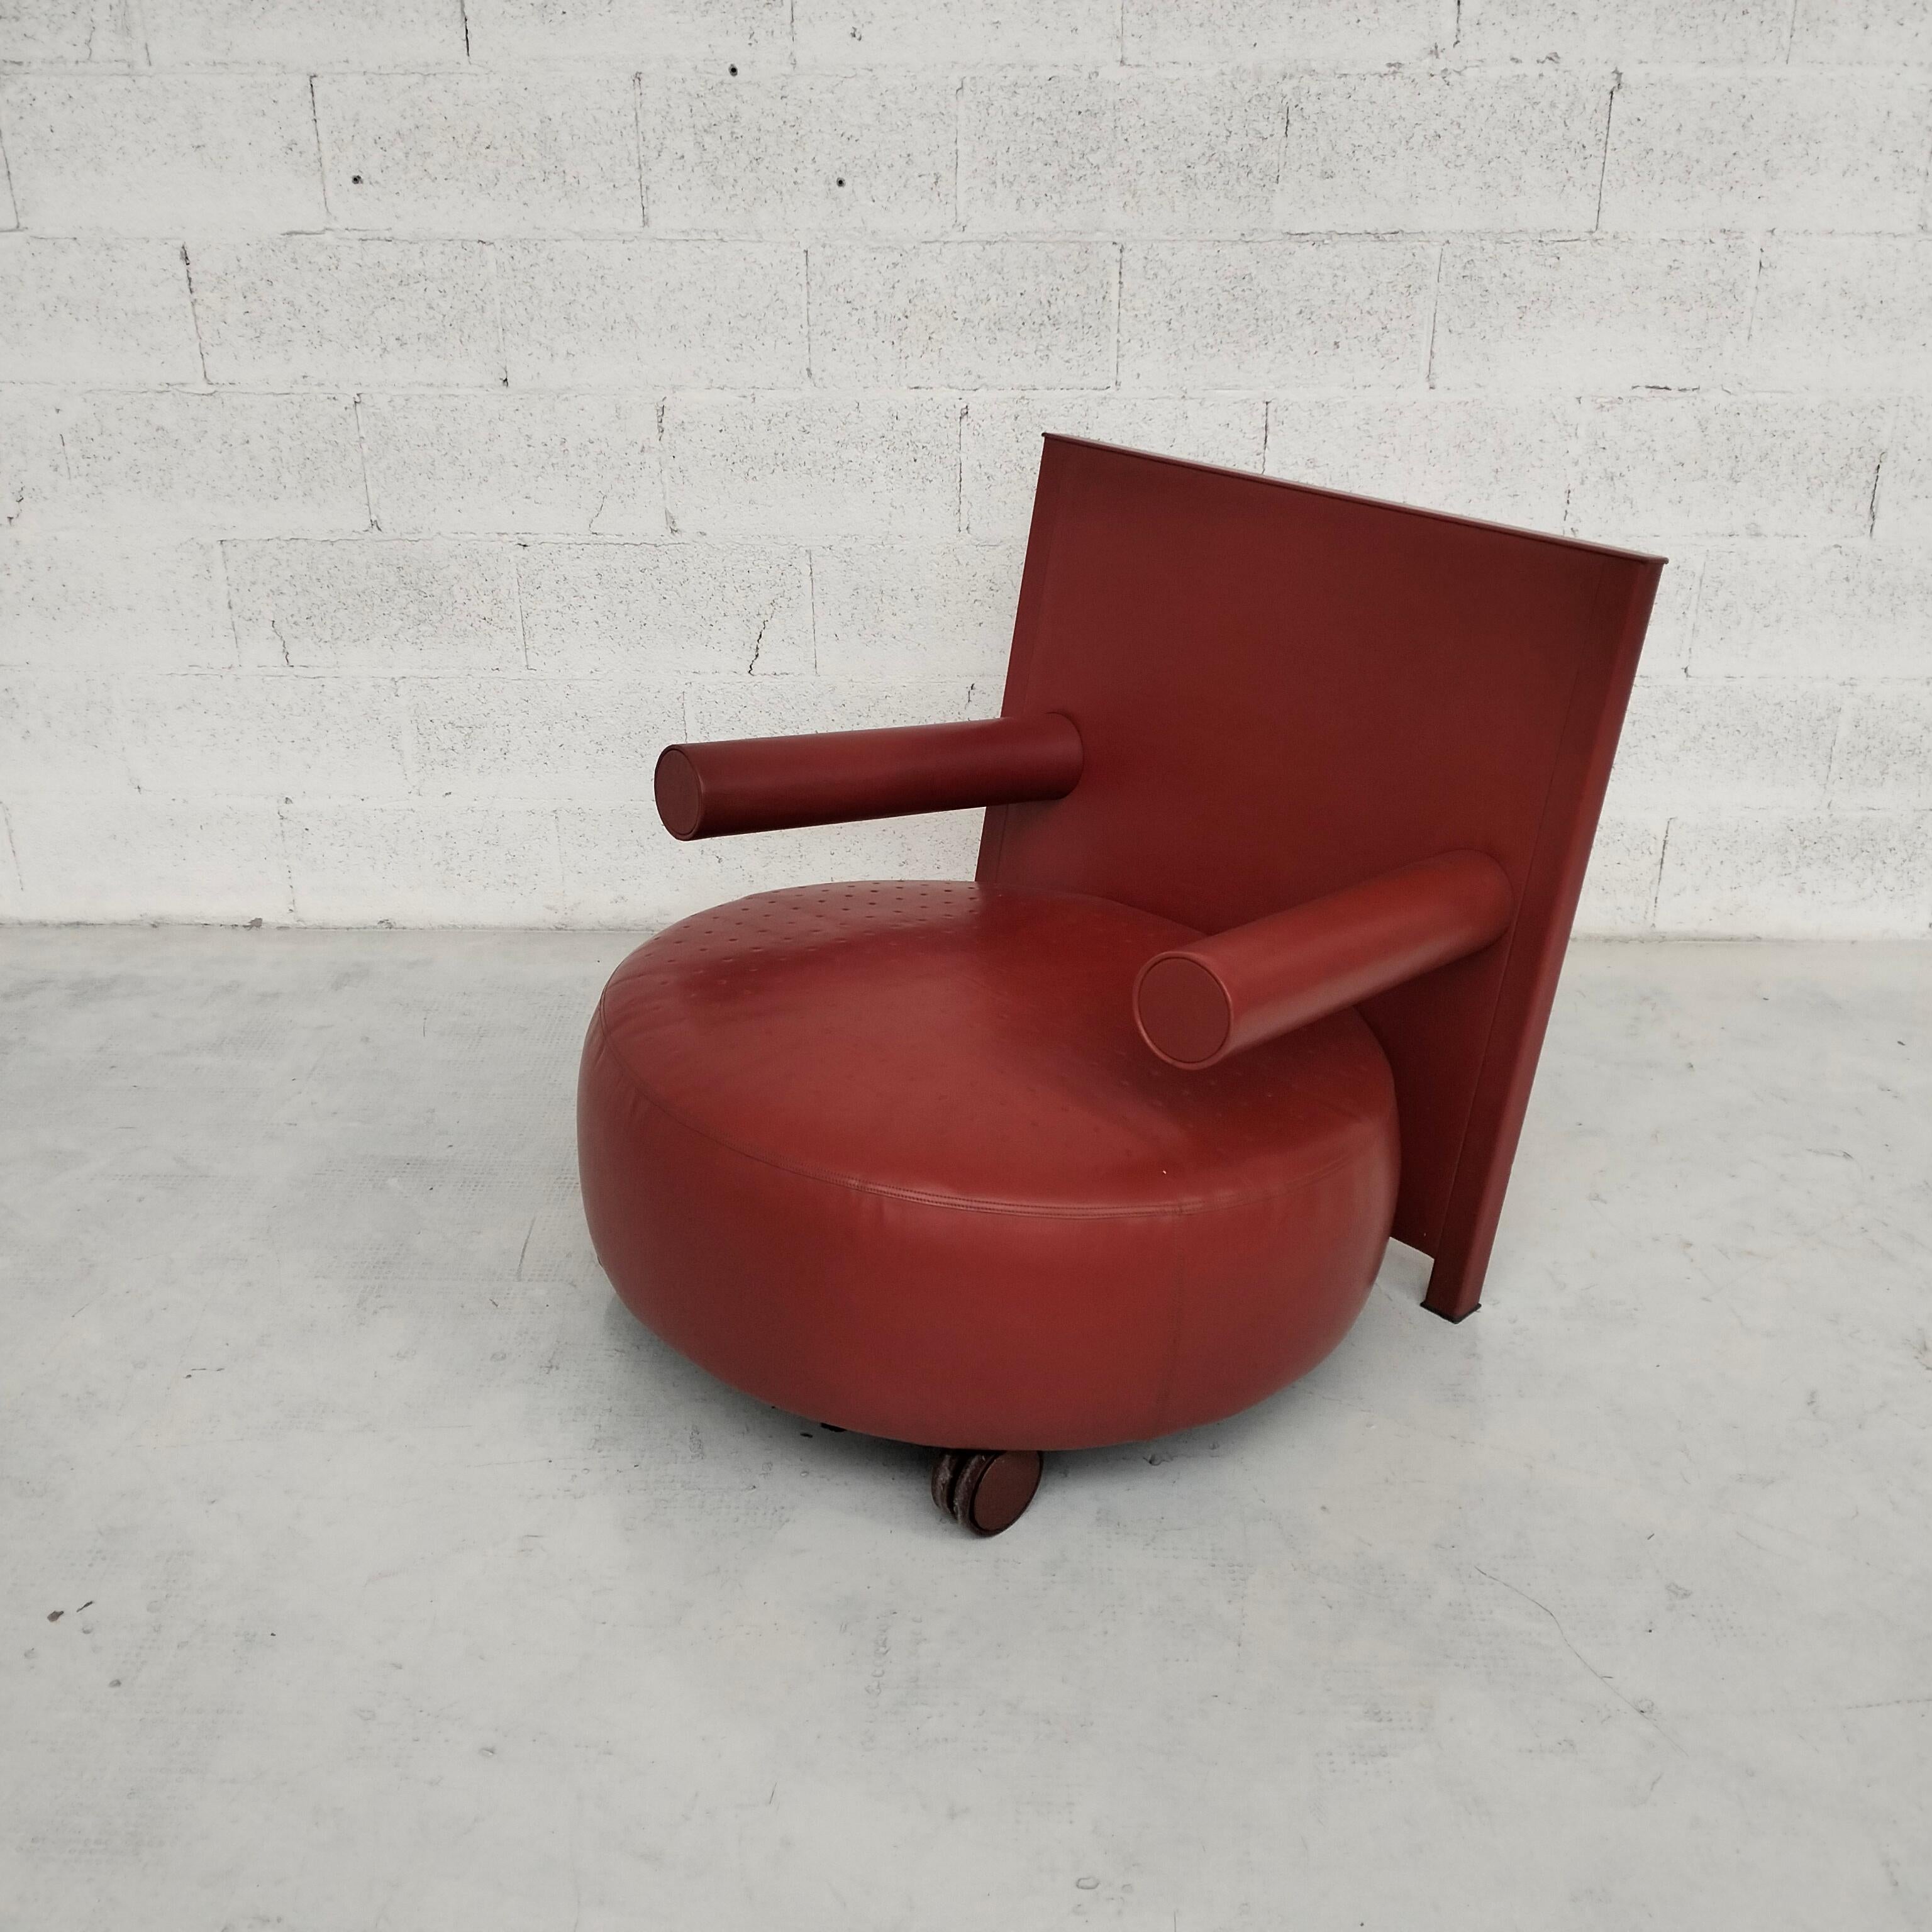 Italian Baisity leather armchair by Antonio Citterio for B&B Italia - 1980’s For Sale